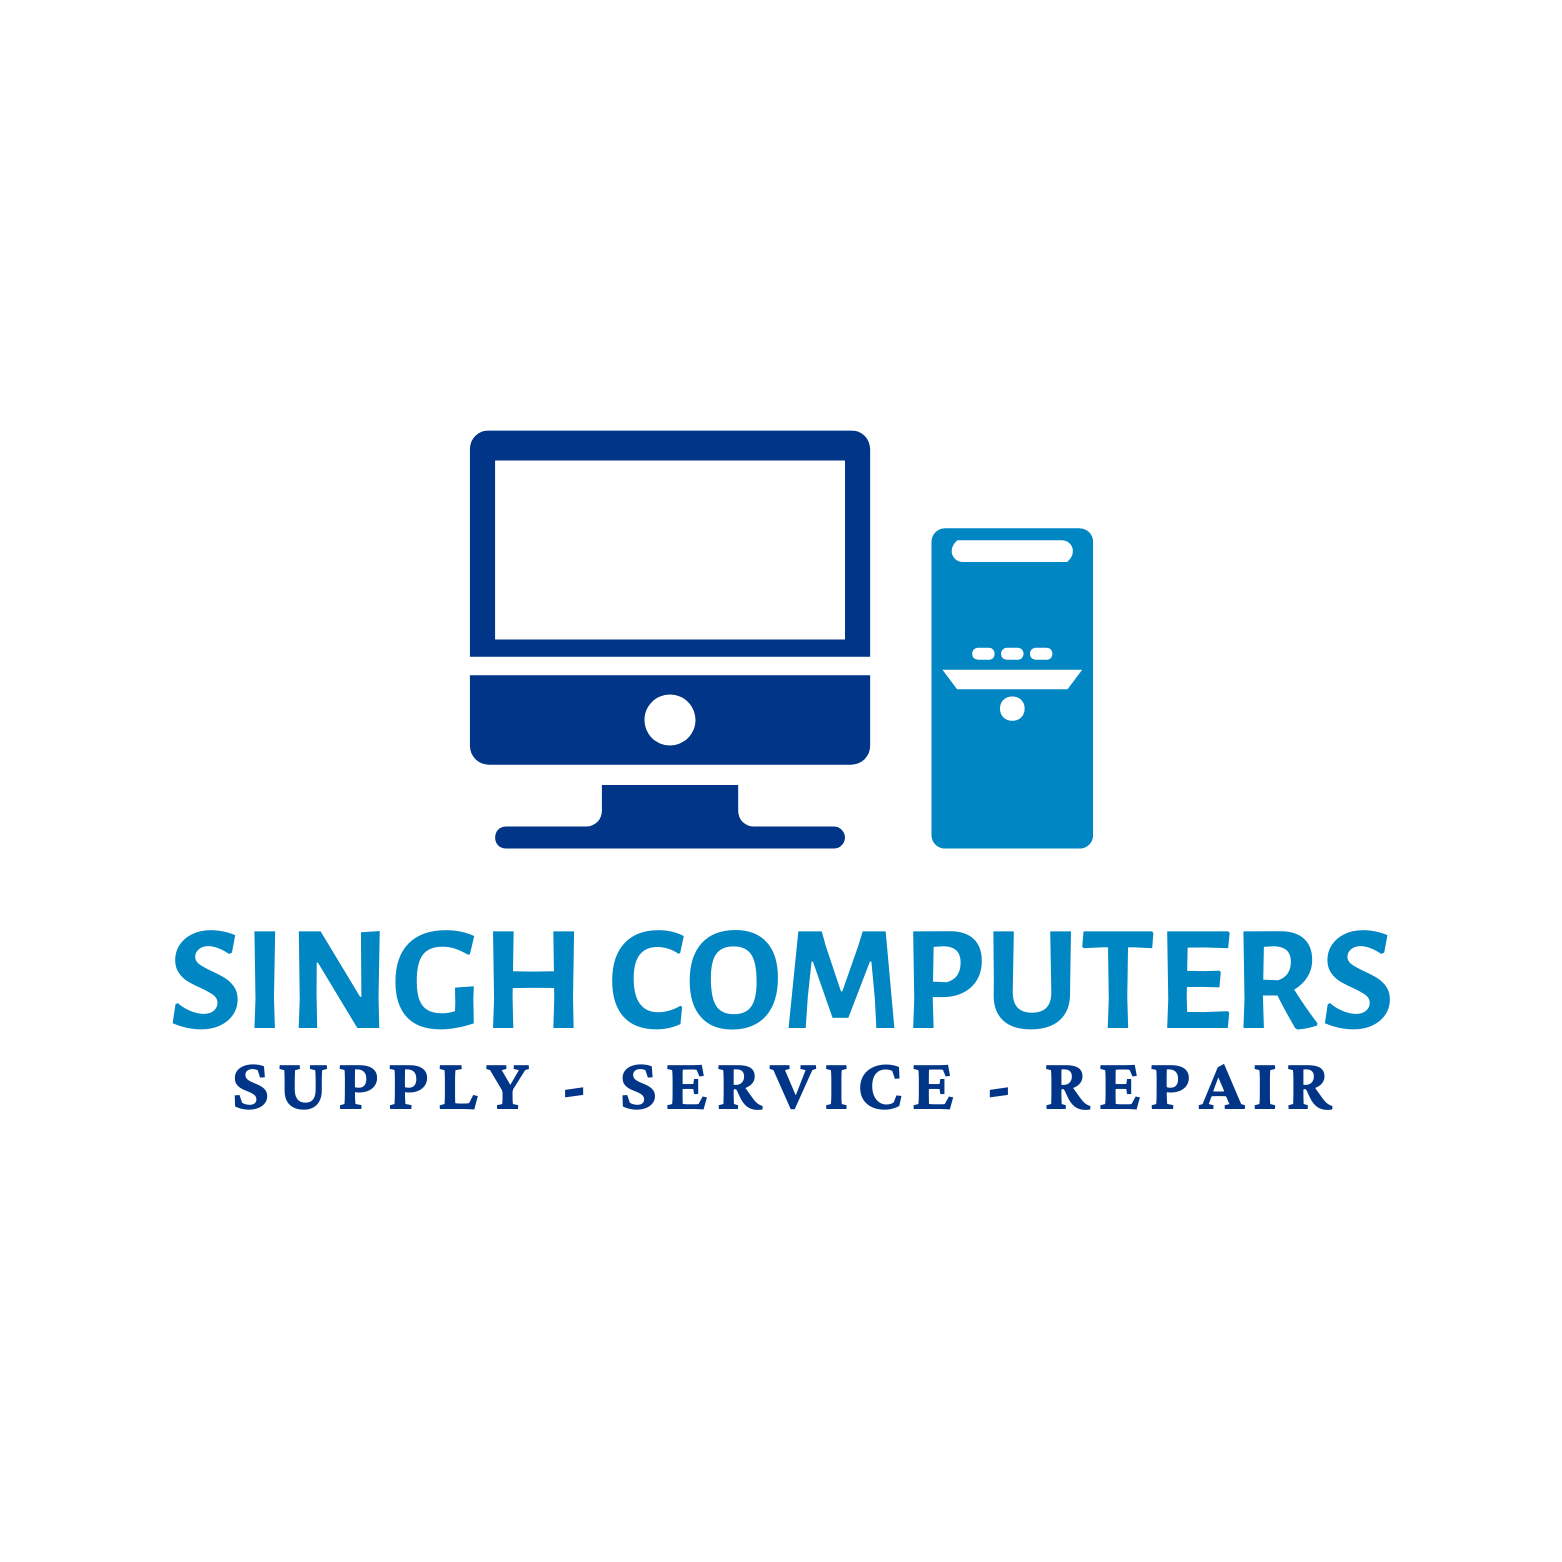 Singh Computers